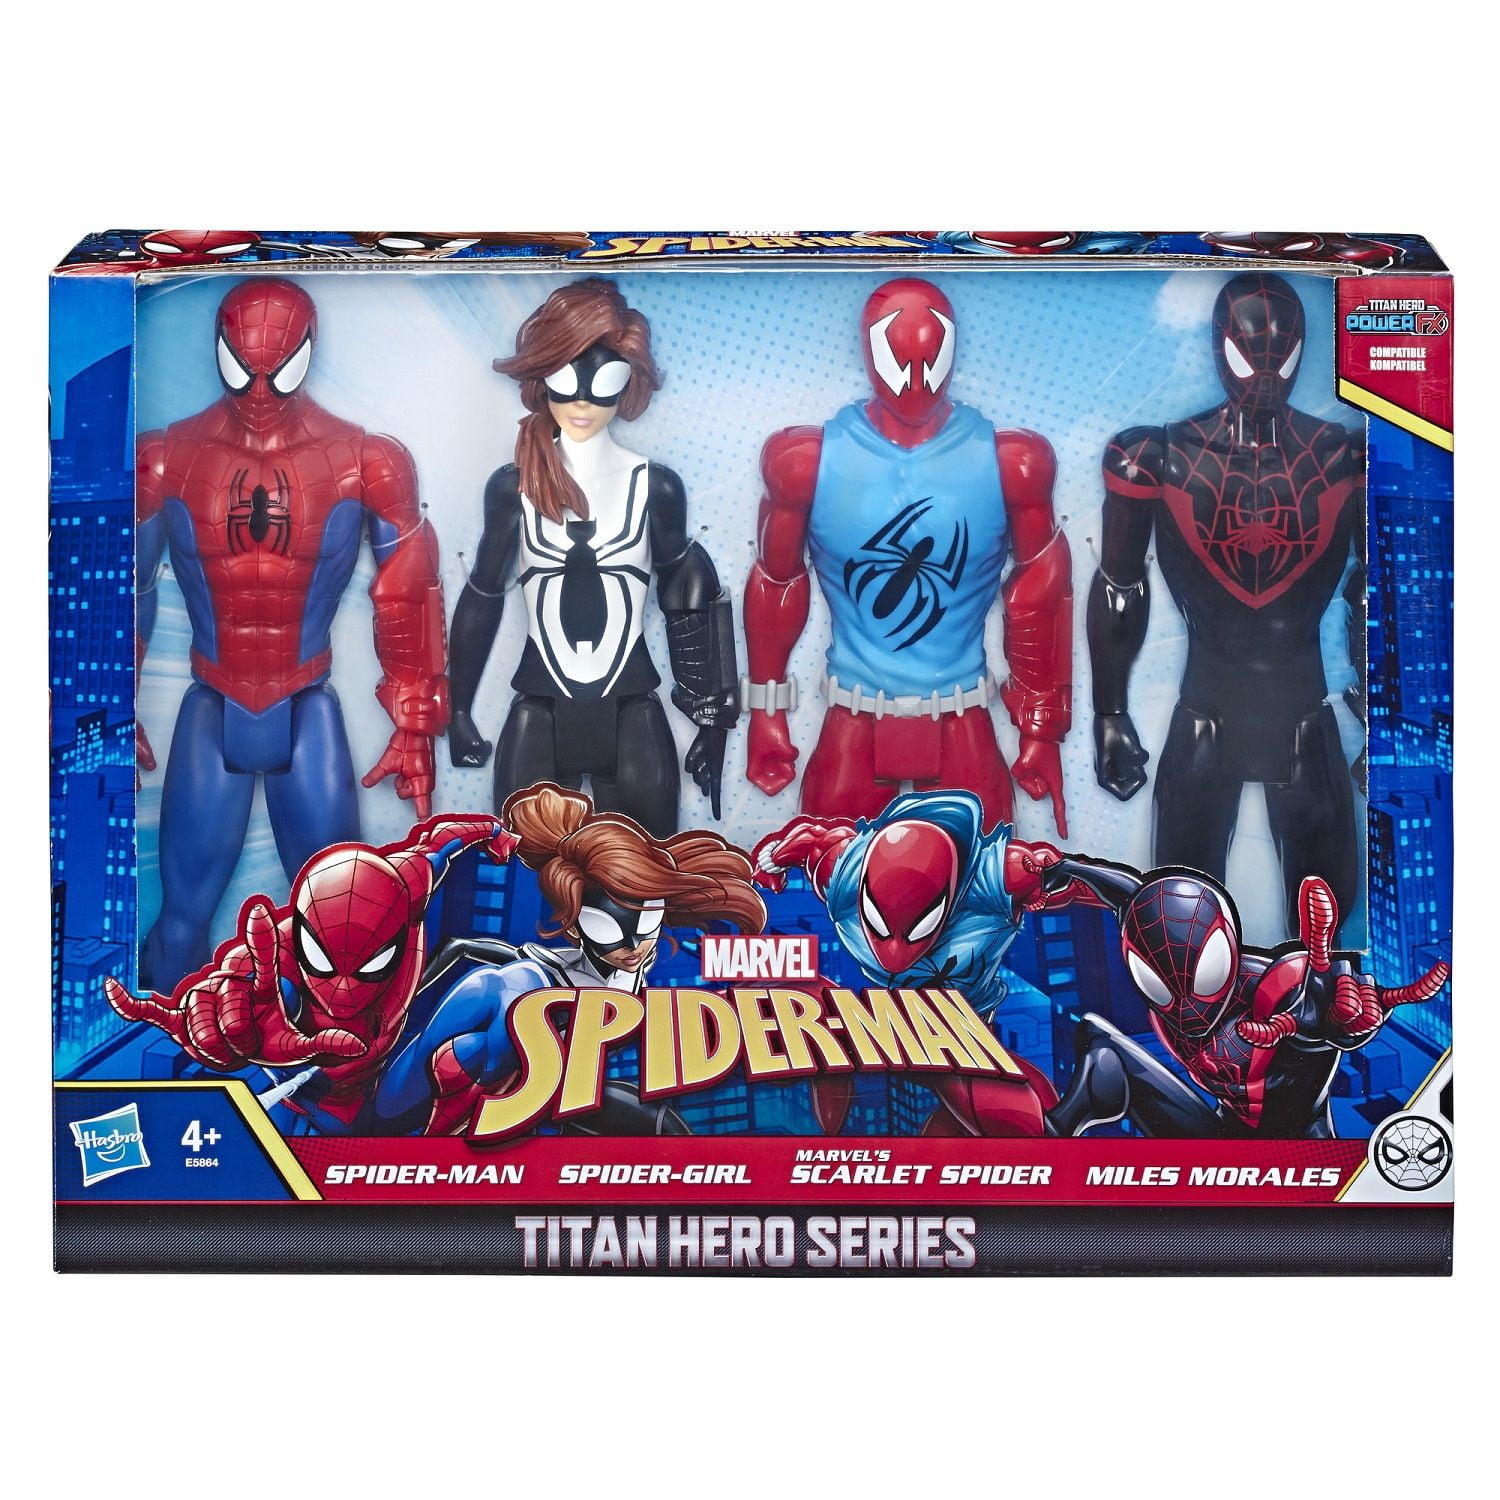 12" The Avengers Action Figure Marvel X-man Spider-Man Iron Man Thor Child Toys 